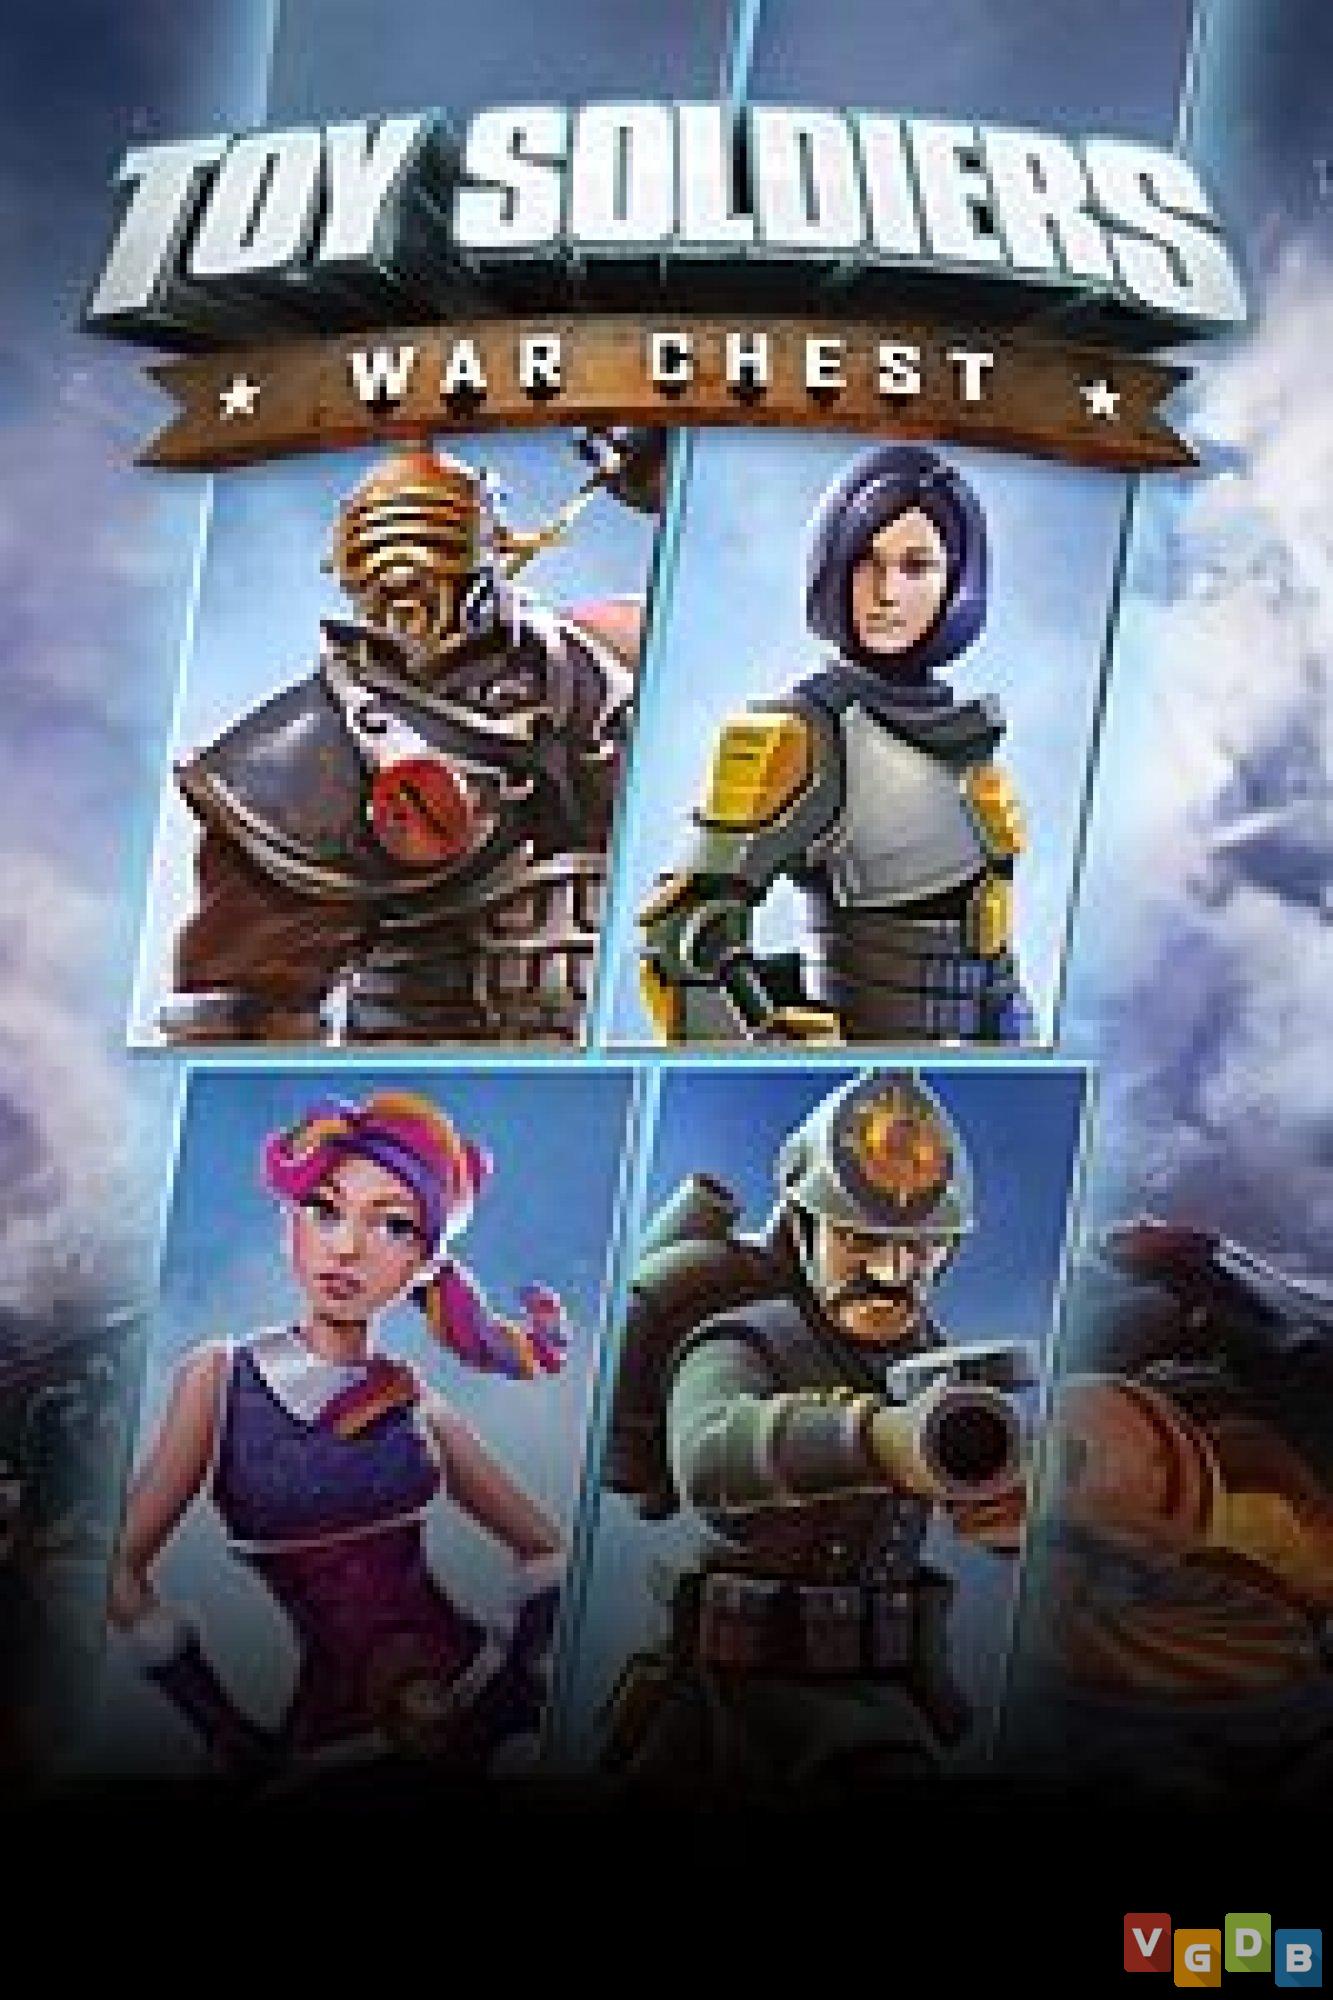 Jogo Toy Soldiers: War Chest (hall Of Fame Edition) - Xbox One em Promoção  na Americanas